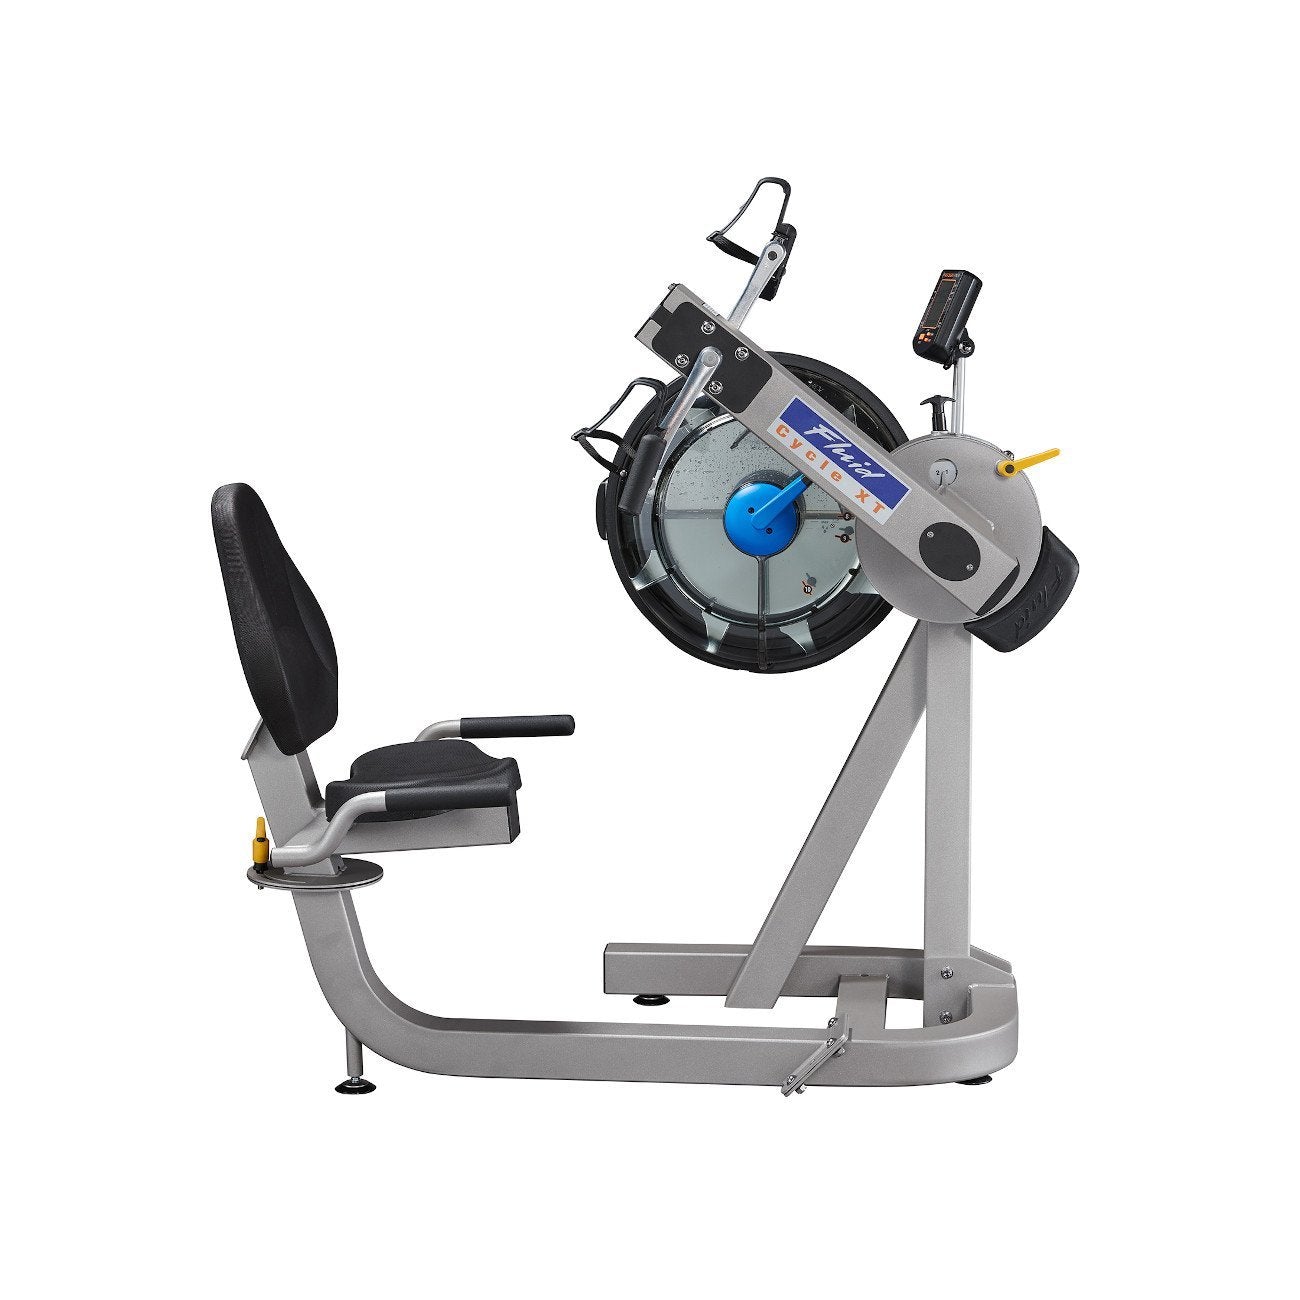 FDF Fluid Exercise E720 Cycle XT Multi-Functional Cross Trainer adjustable arm crank.